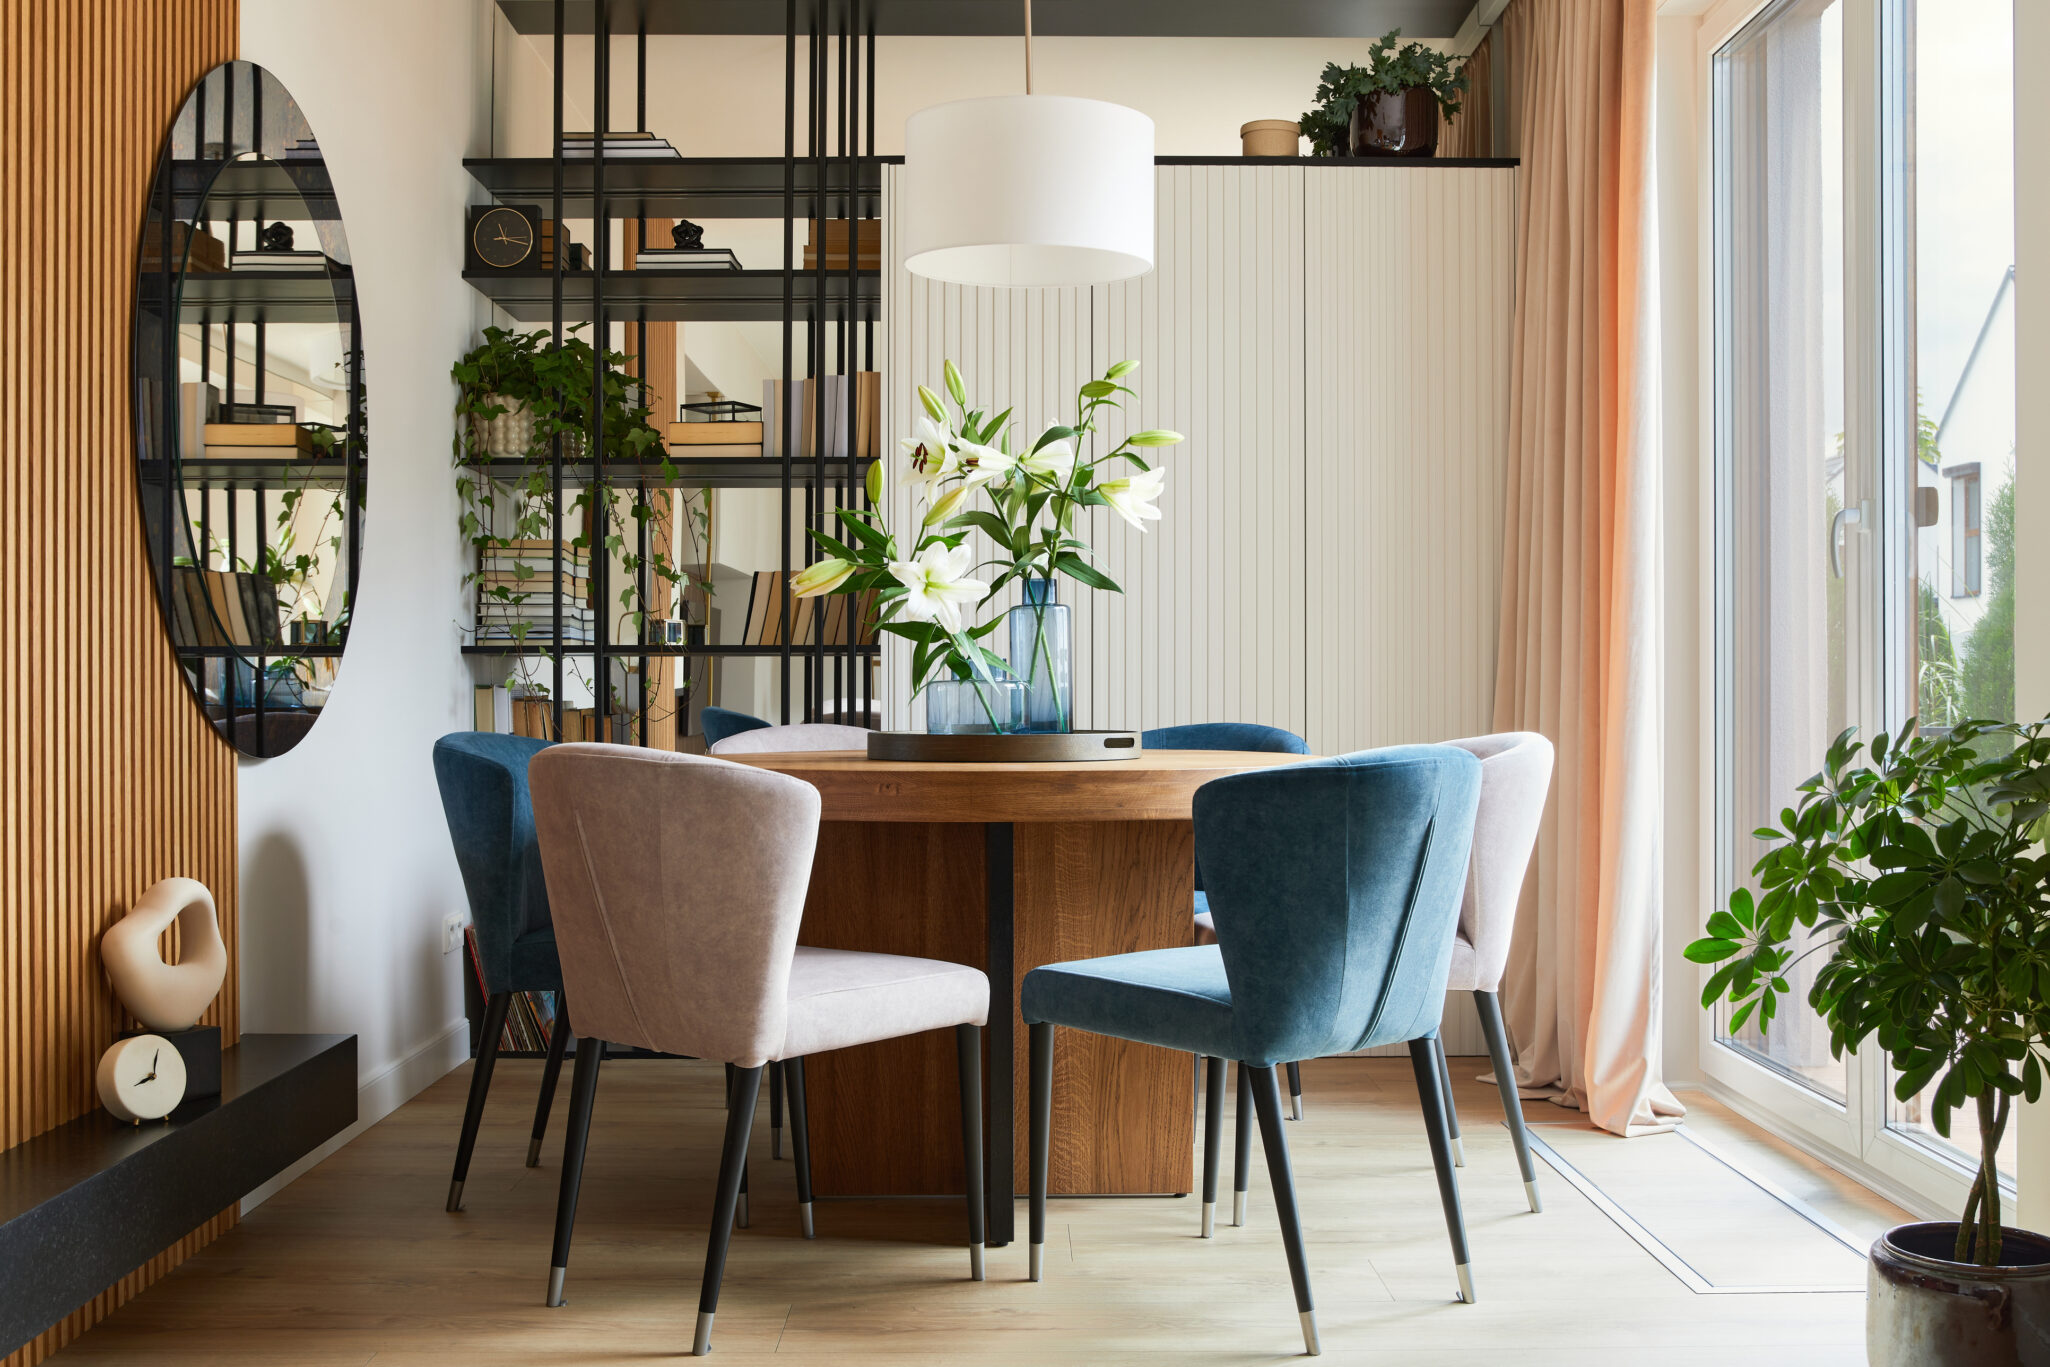 A stylish mid century modern apartment dining room